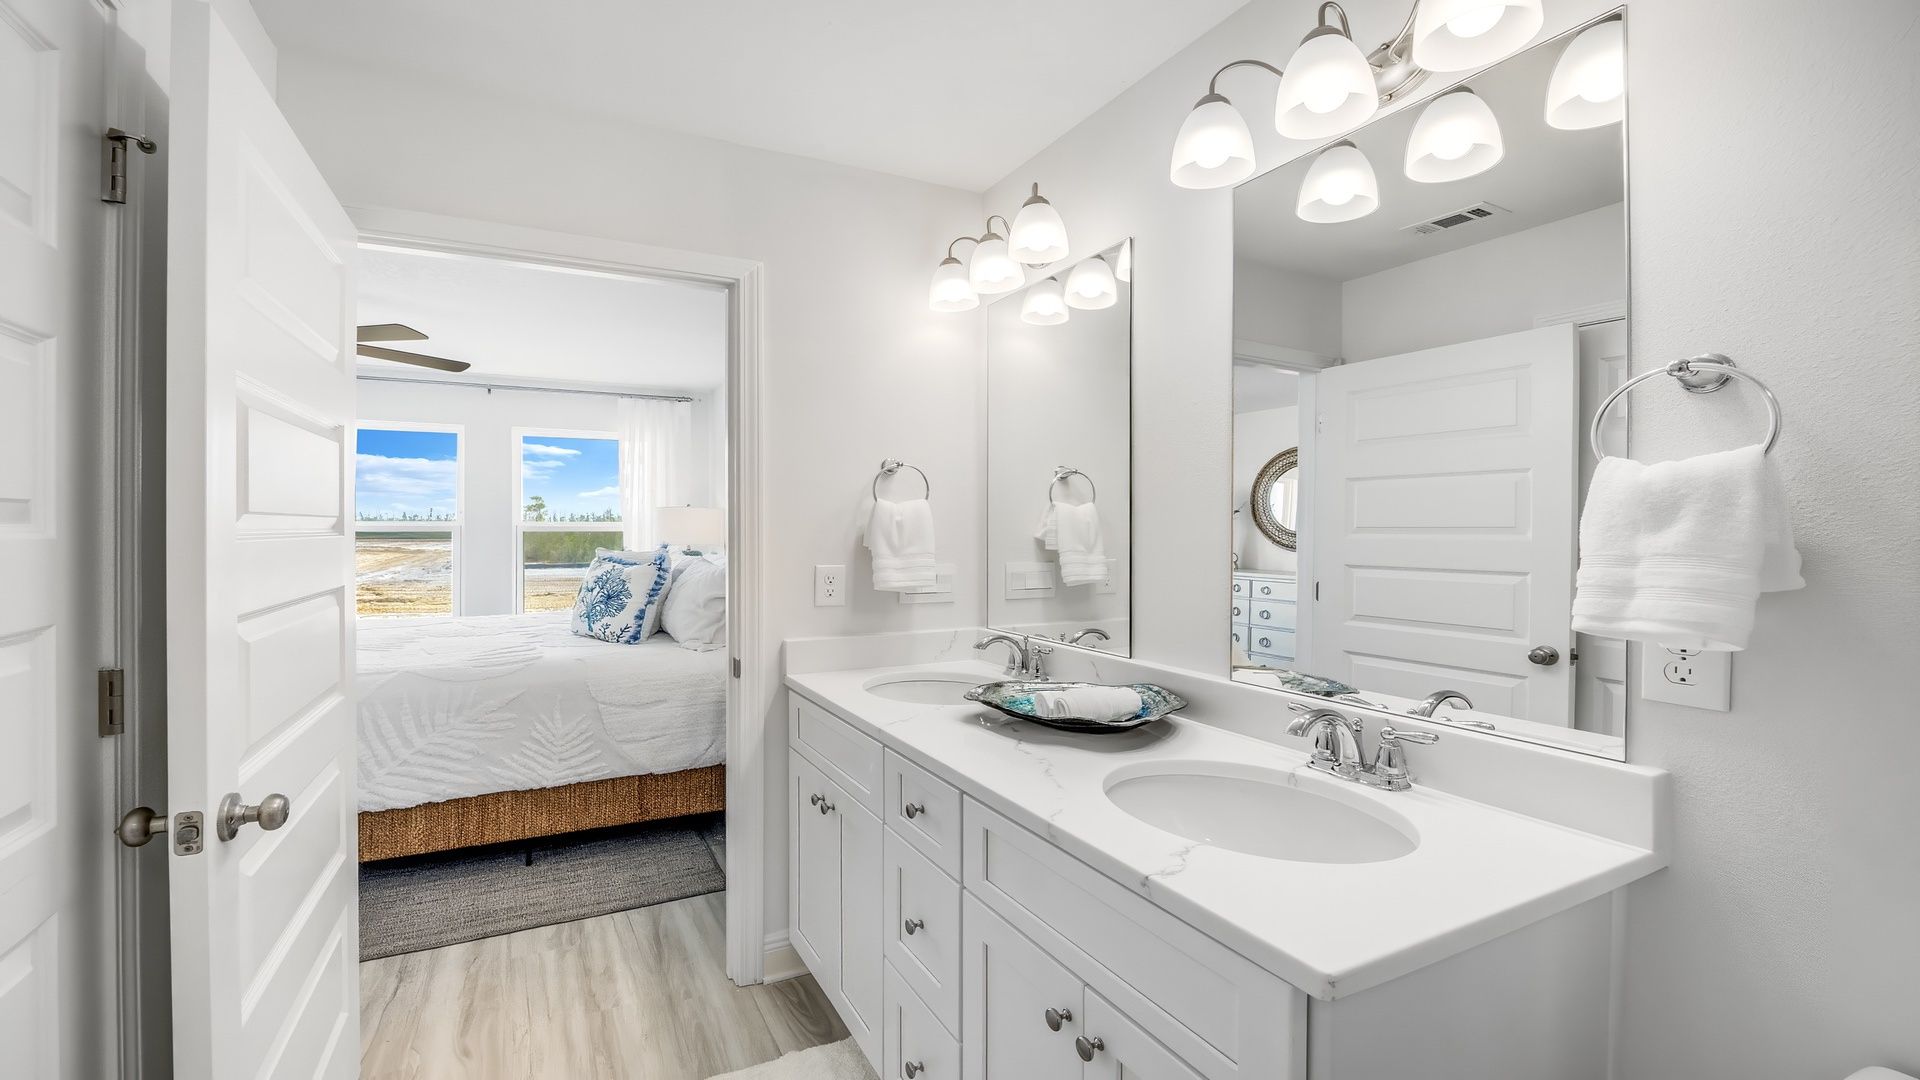 Primary bathroom with white quartz countertops and double vanity and bedroom doorway.